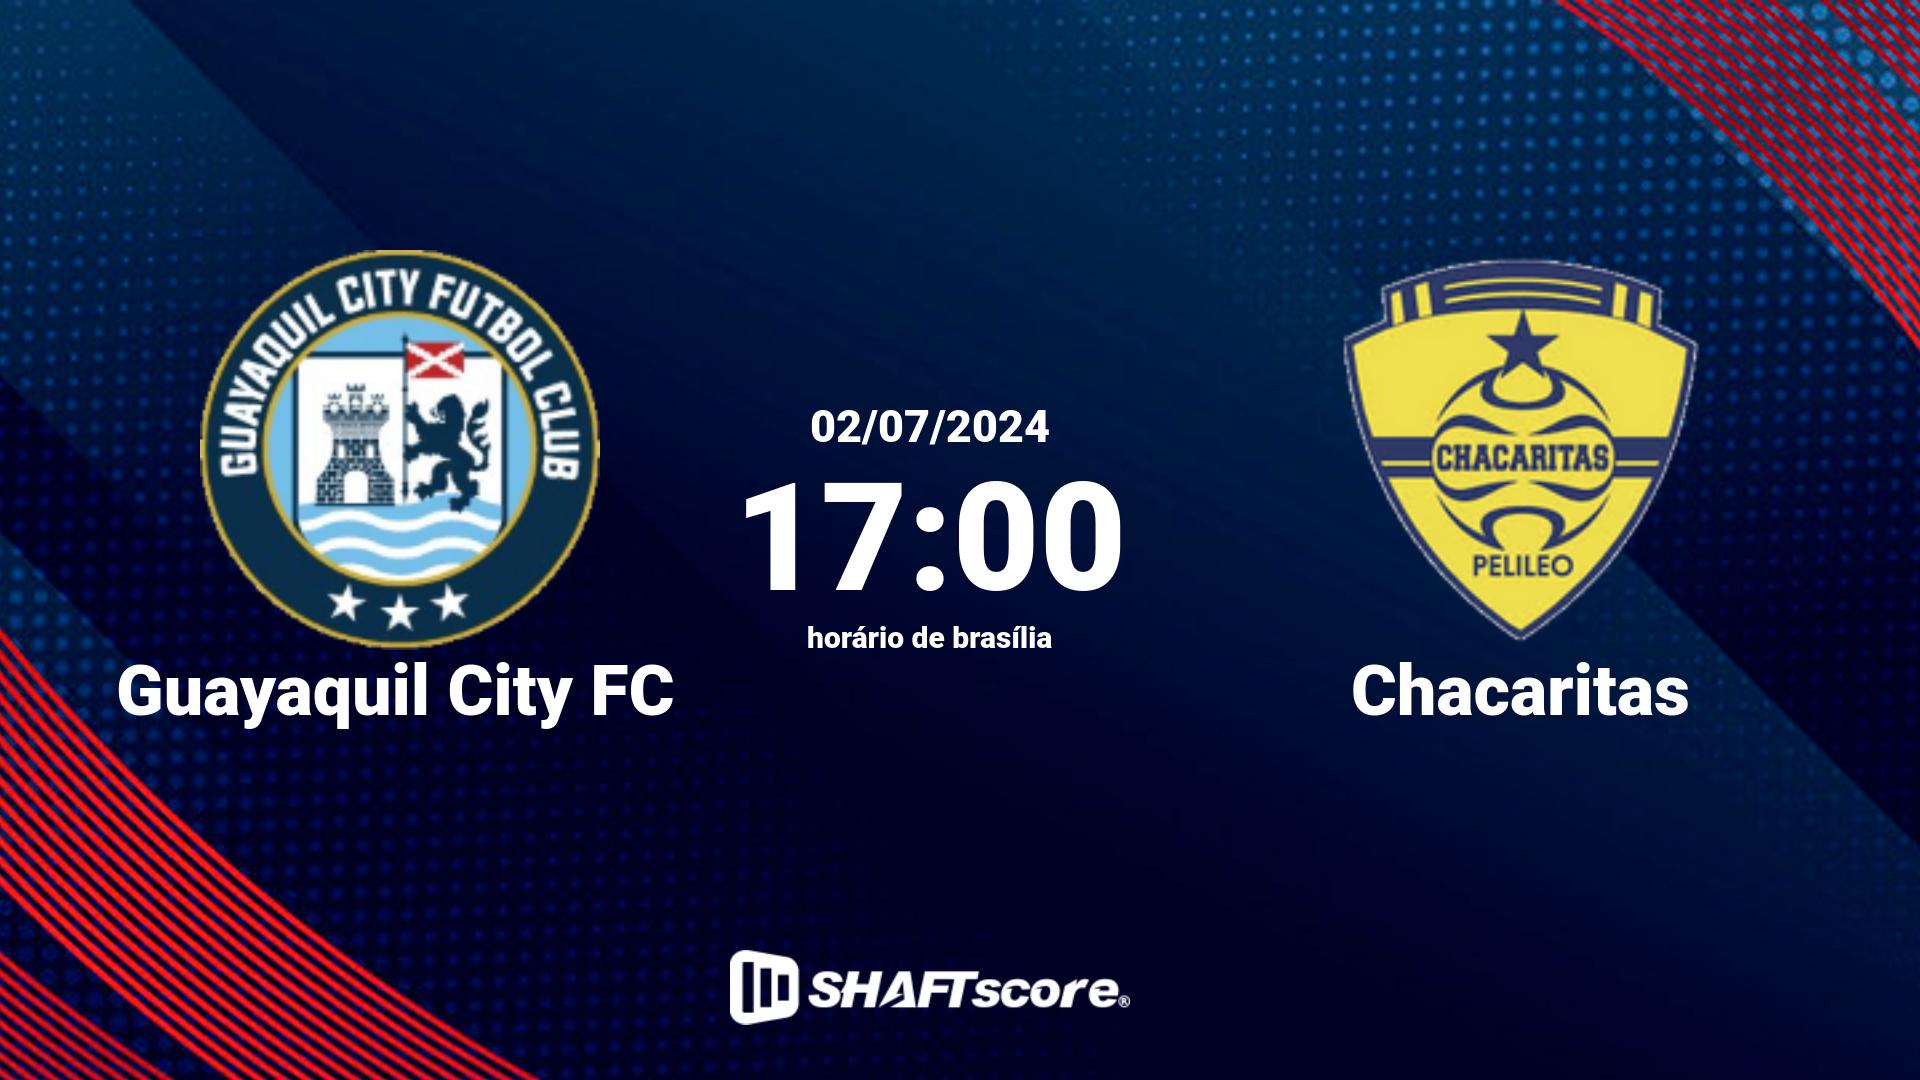 Estatísticas do jogo Guayaquil City FC vs Chacaritas 02.07 17:00